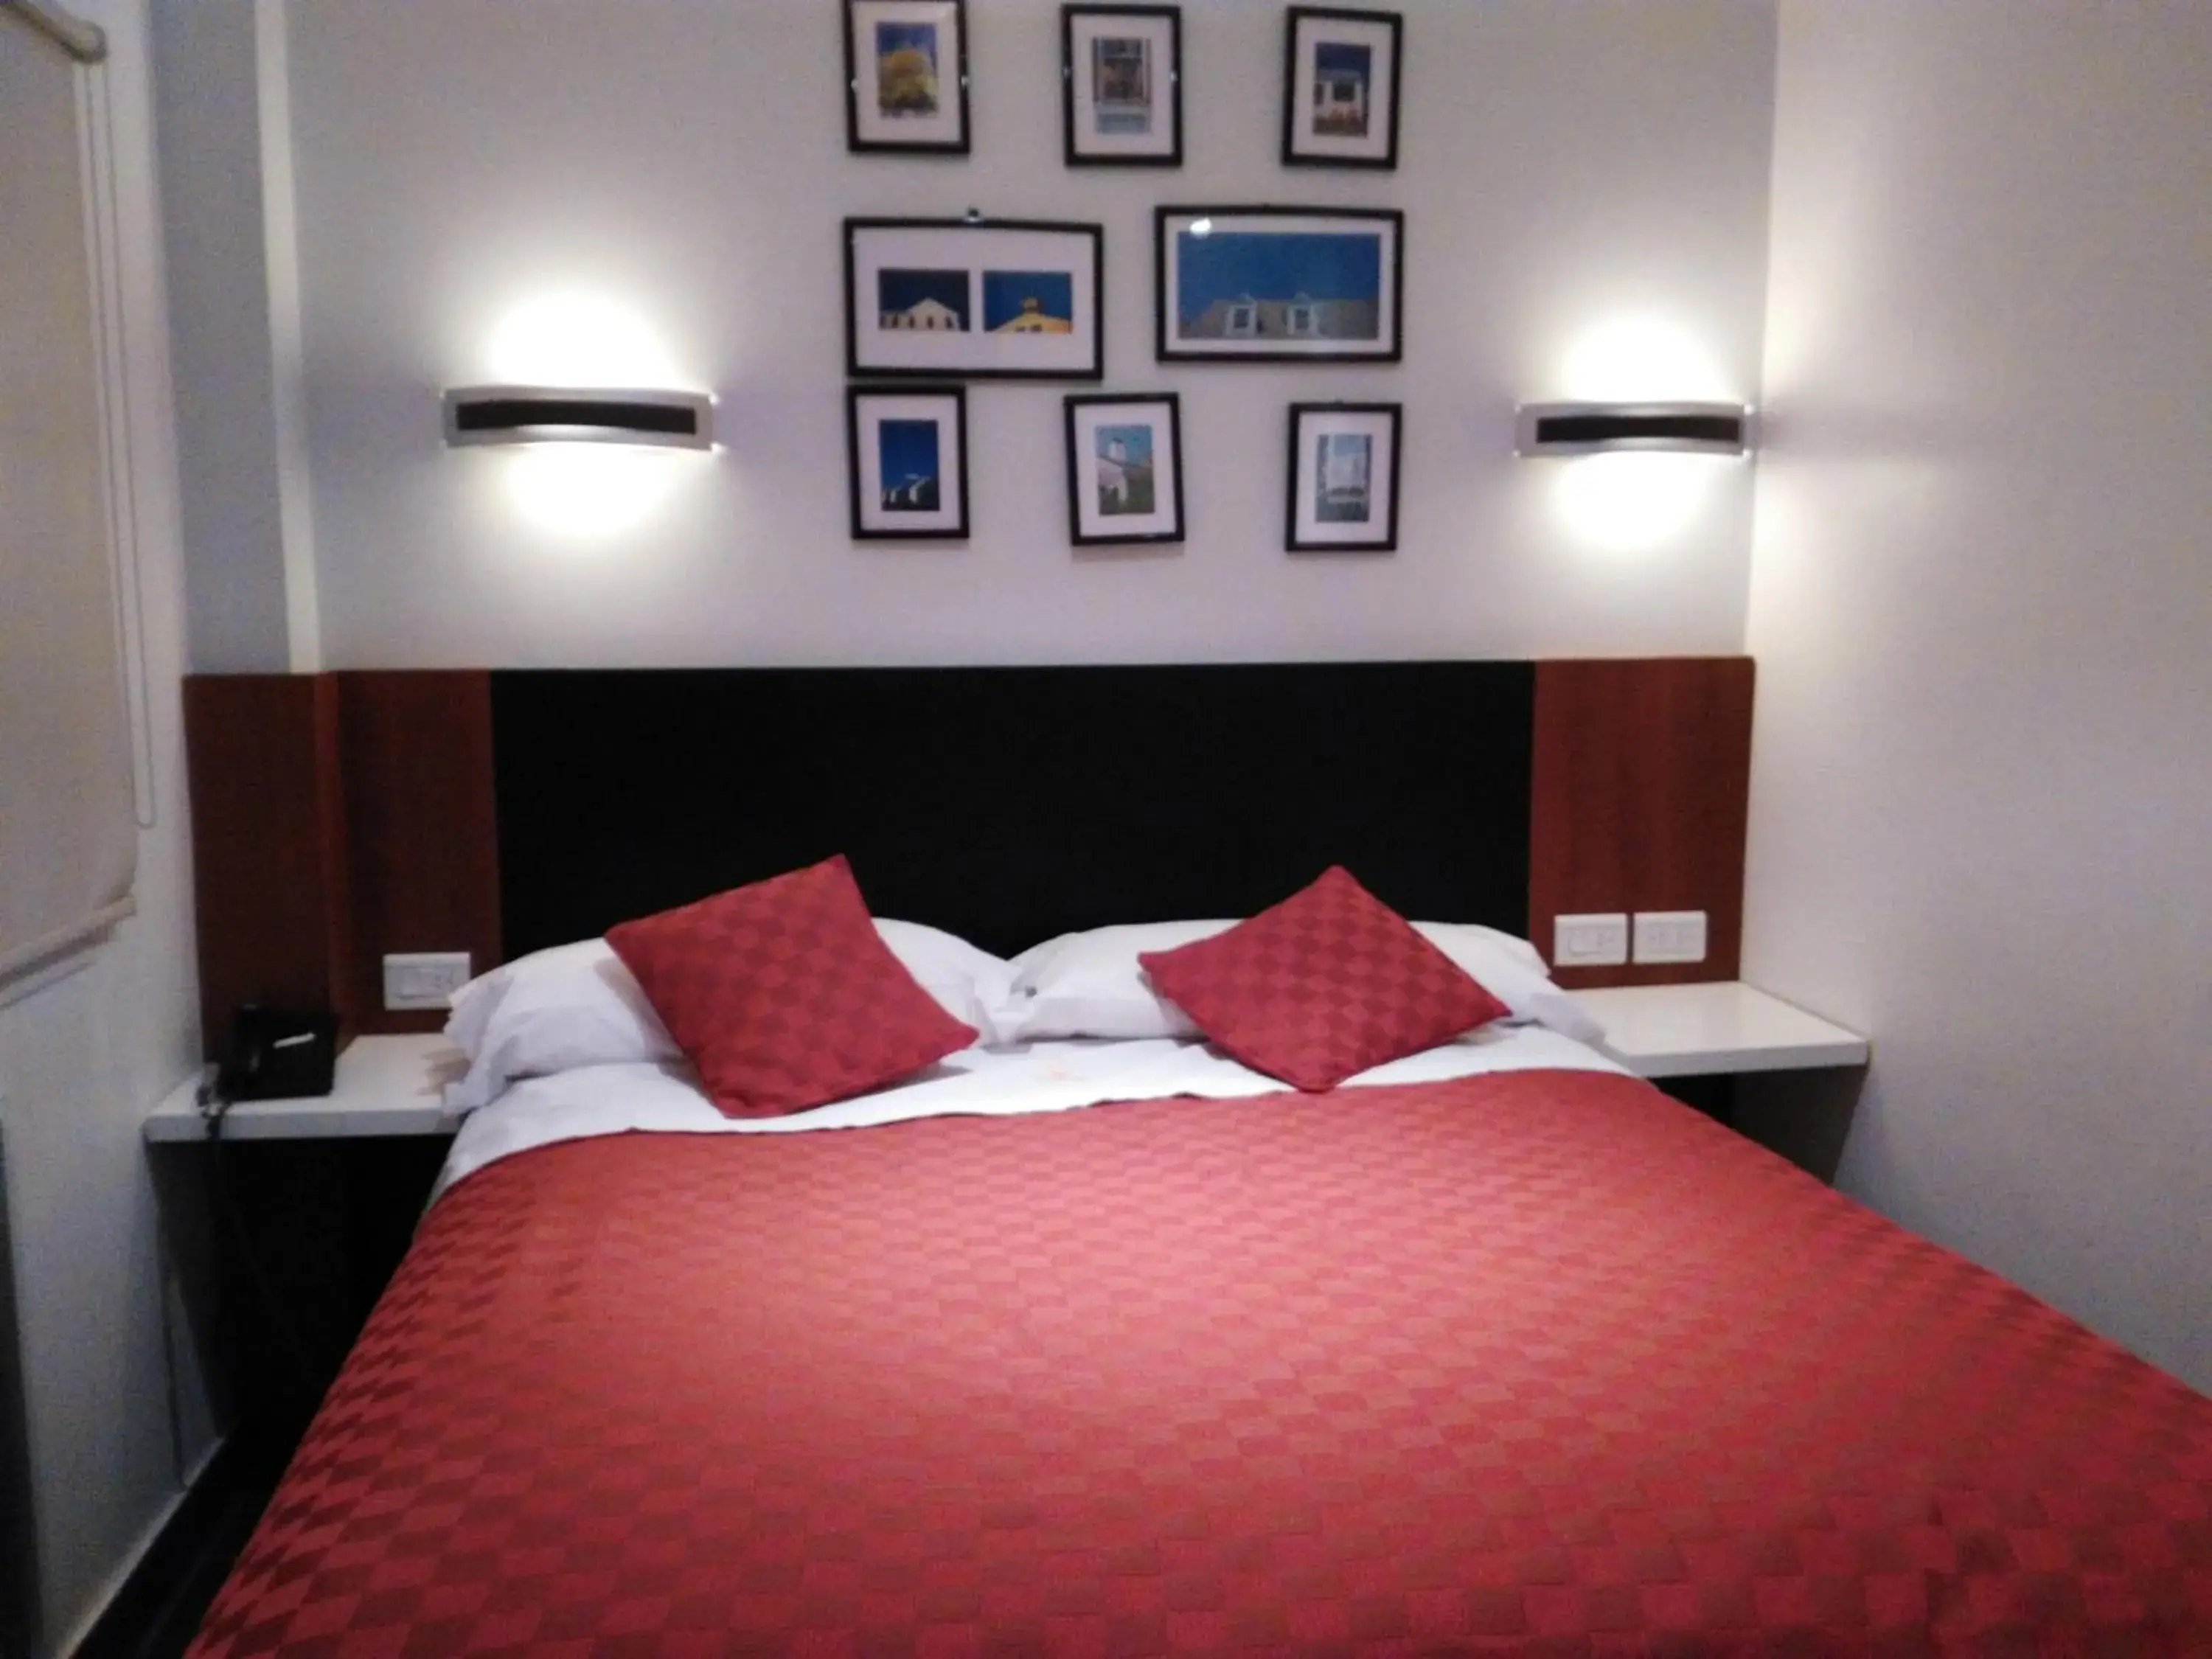 Bedroom, Room Photo in Hotel A&B Internacional